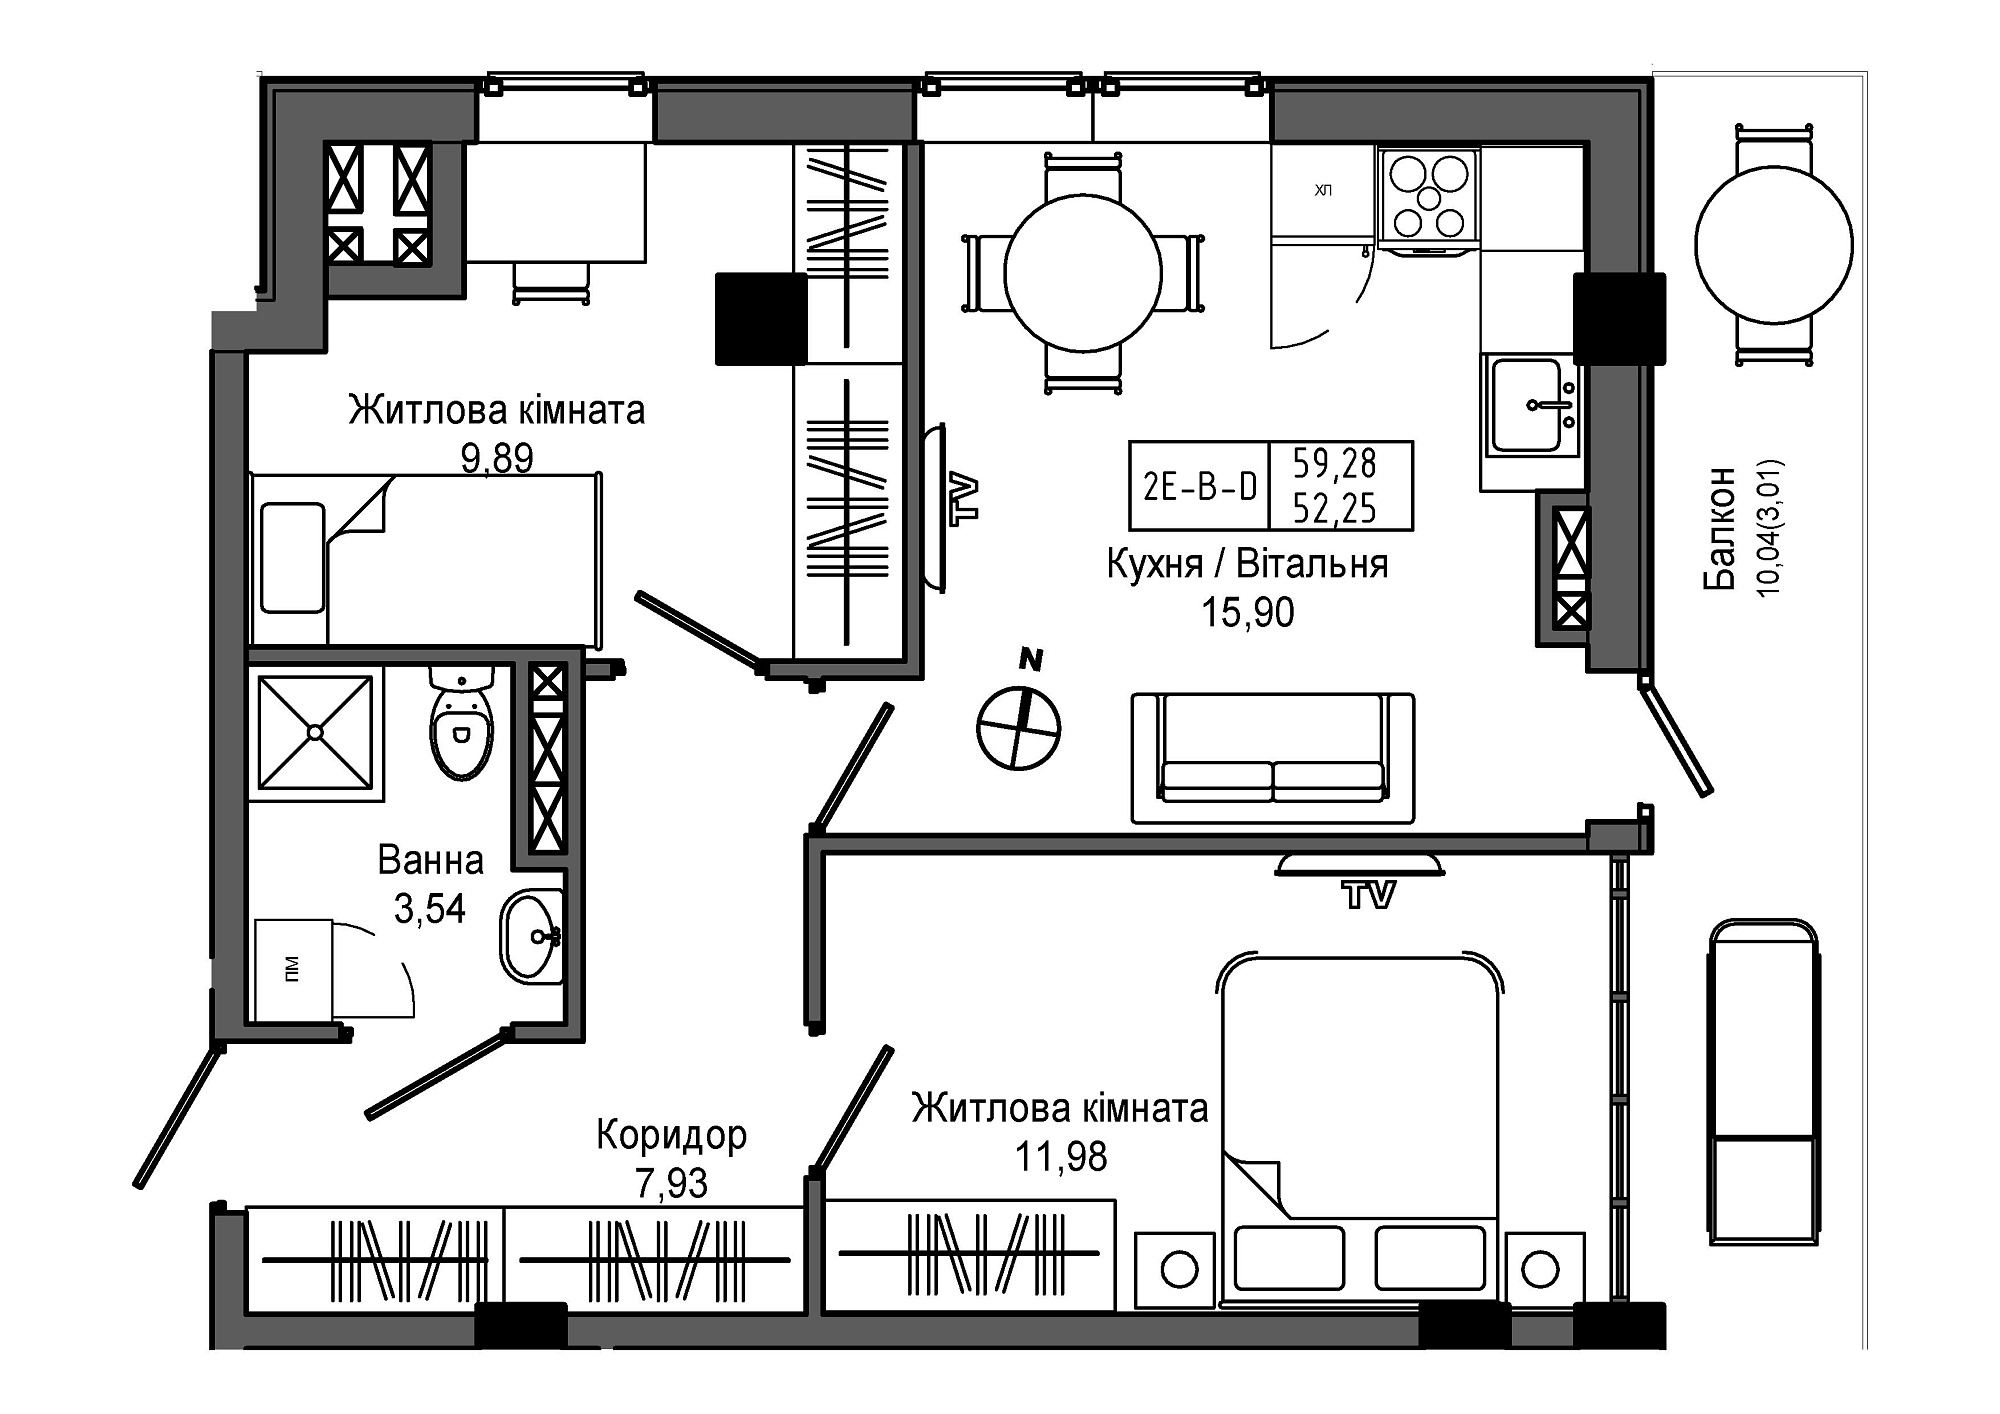 Планування 2-к квартира площею 52.25м2, UM-006-07/0020.